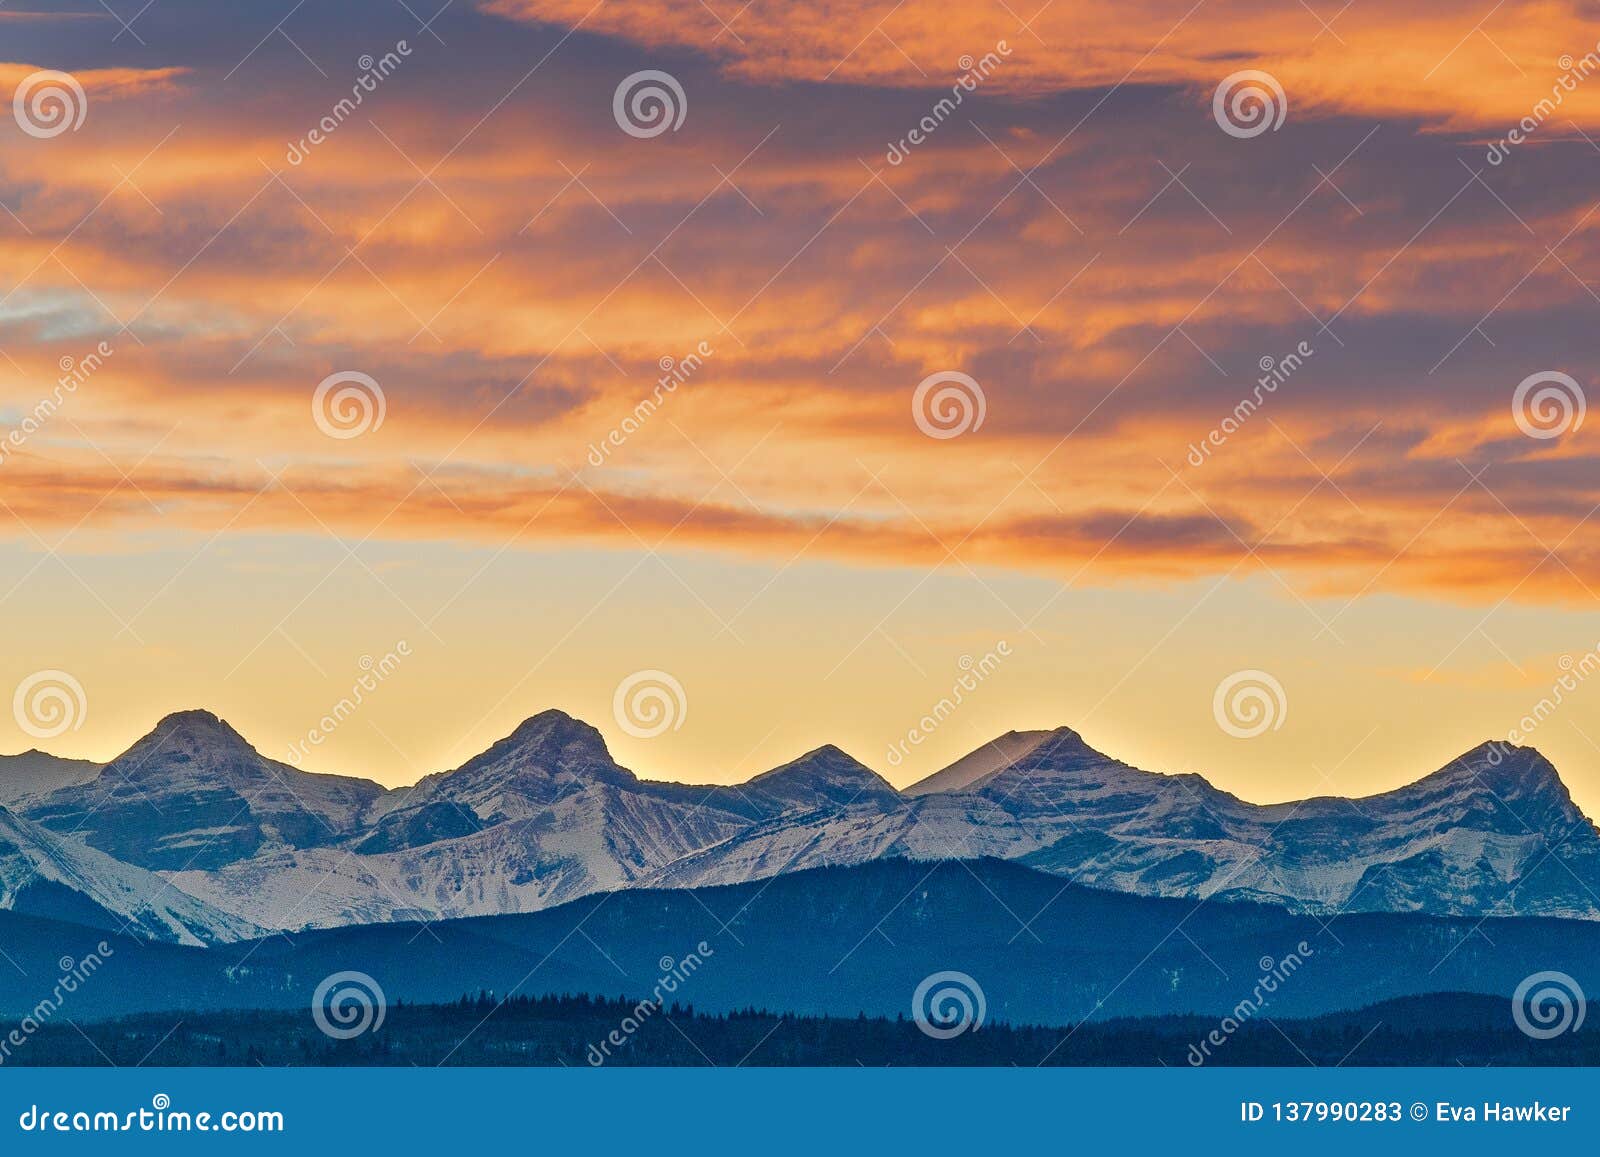 canadian rockies sunset outside calgary, alberta, canada